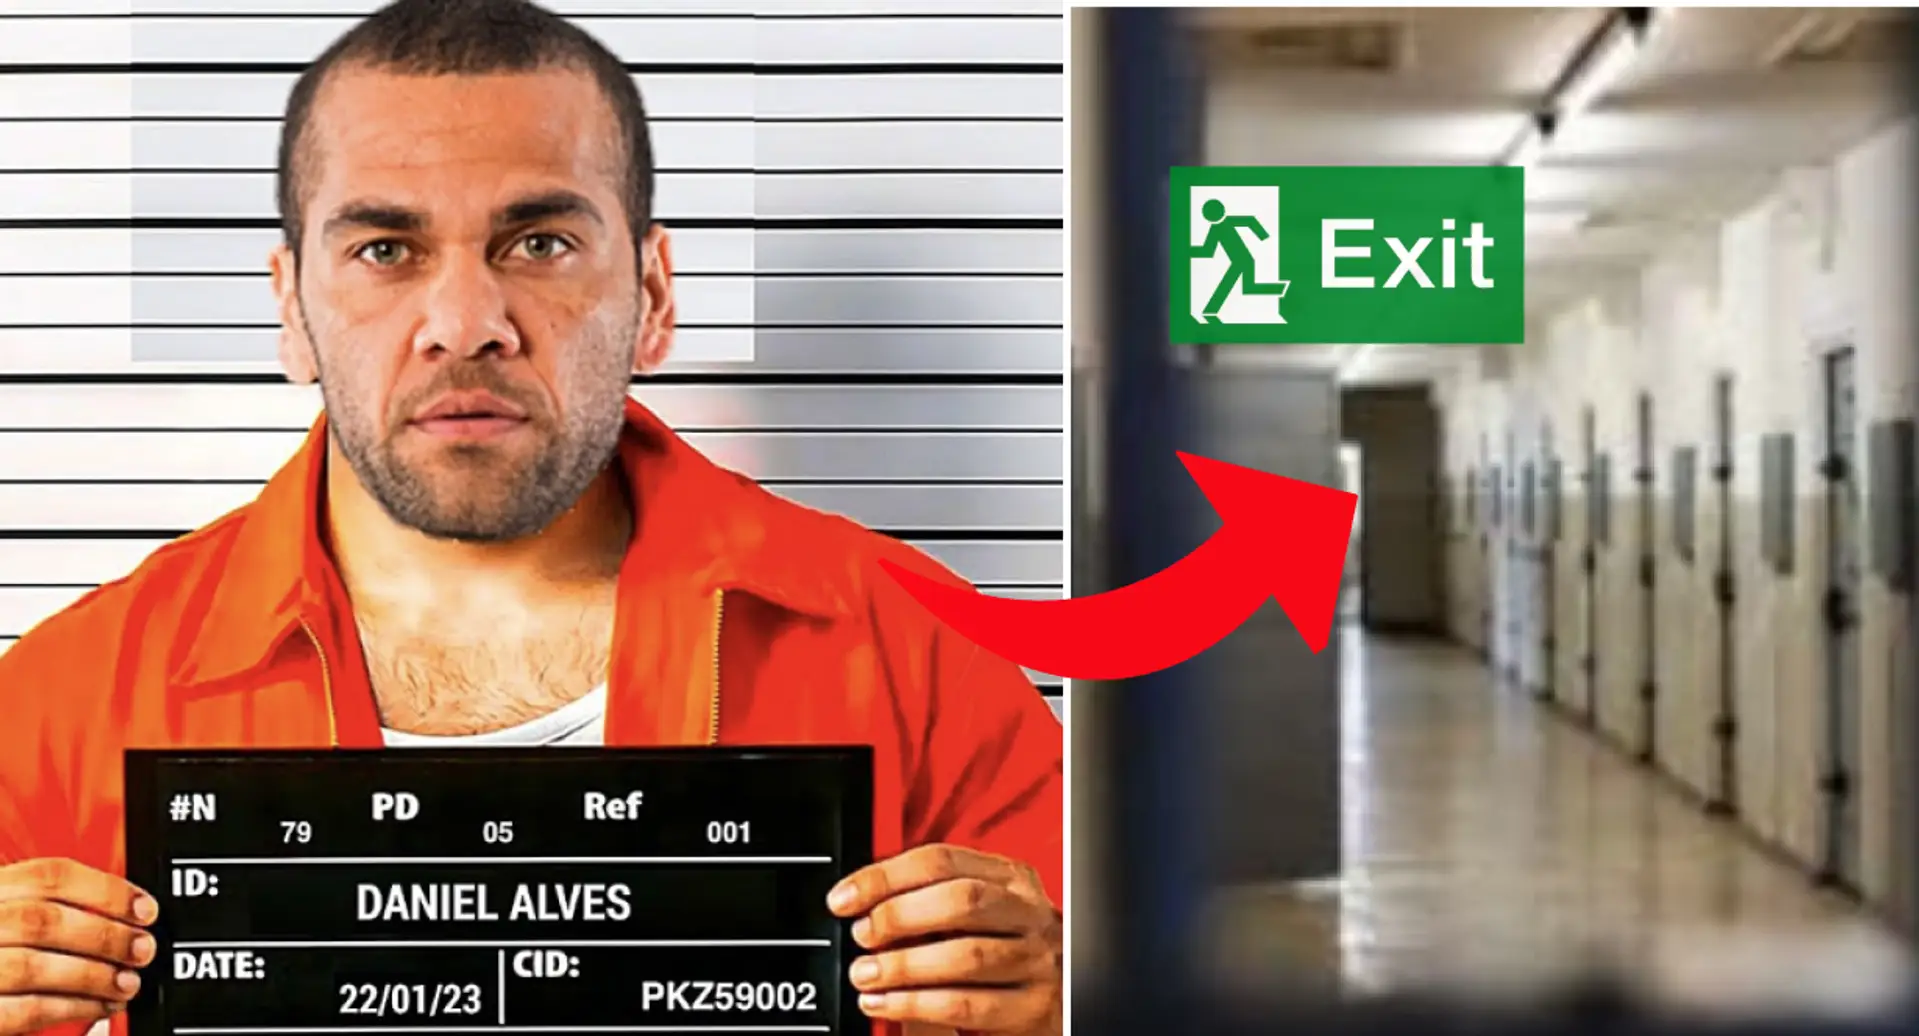 Dani Alves' gescheiterter Fluchtplan aus dem Gefängnis enthüllt